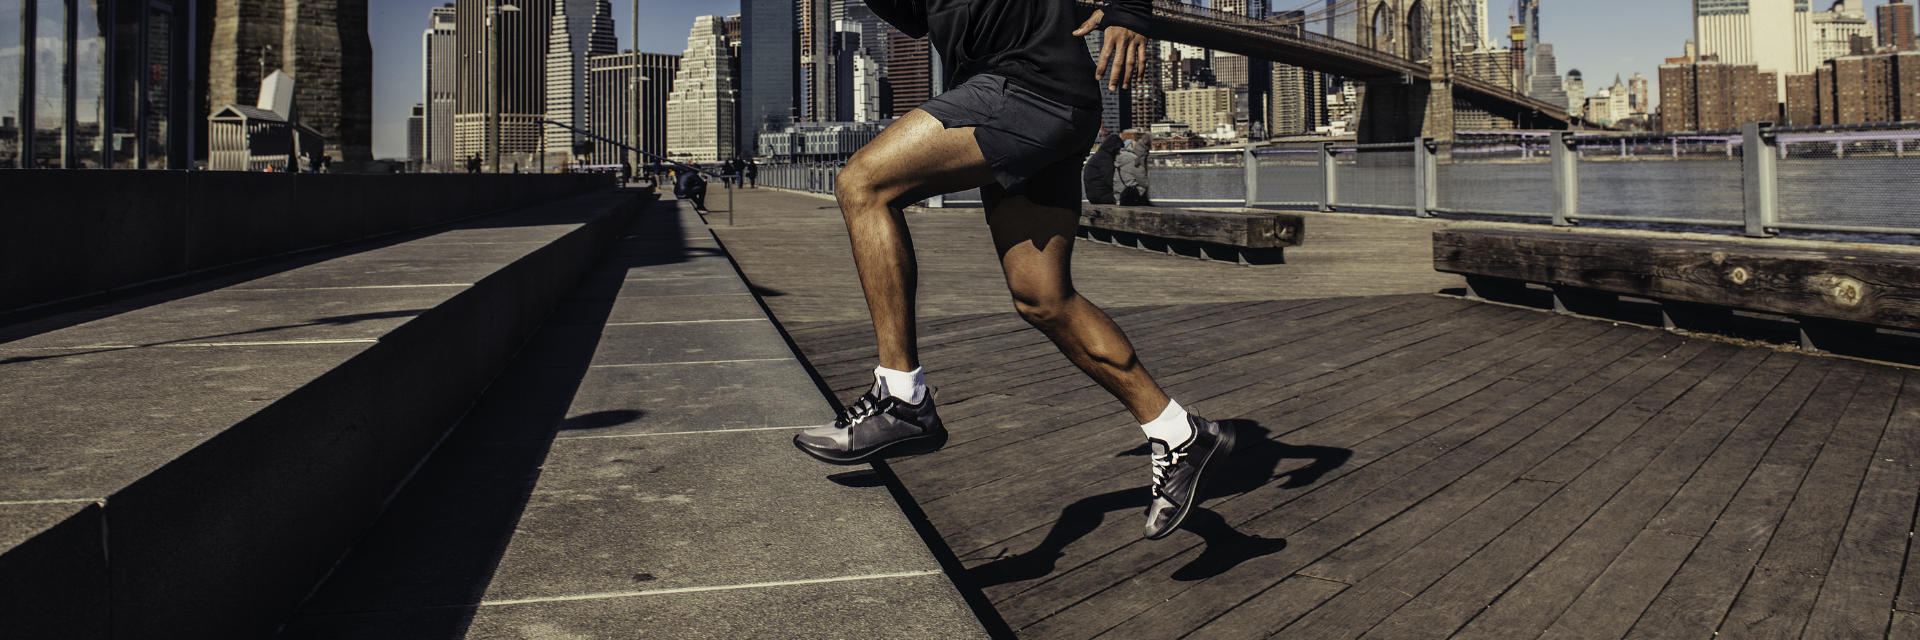 NYC Runner's Knee Treatment, Pain Relief | Chondromalacia Patella ...